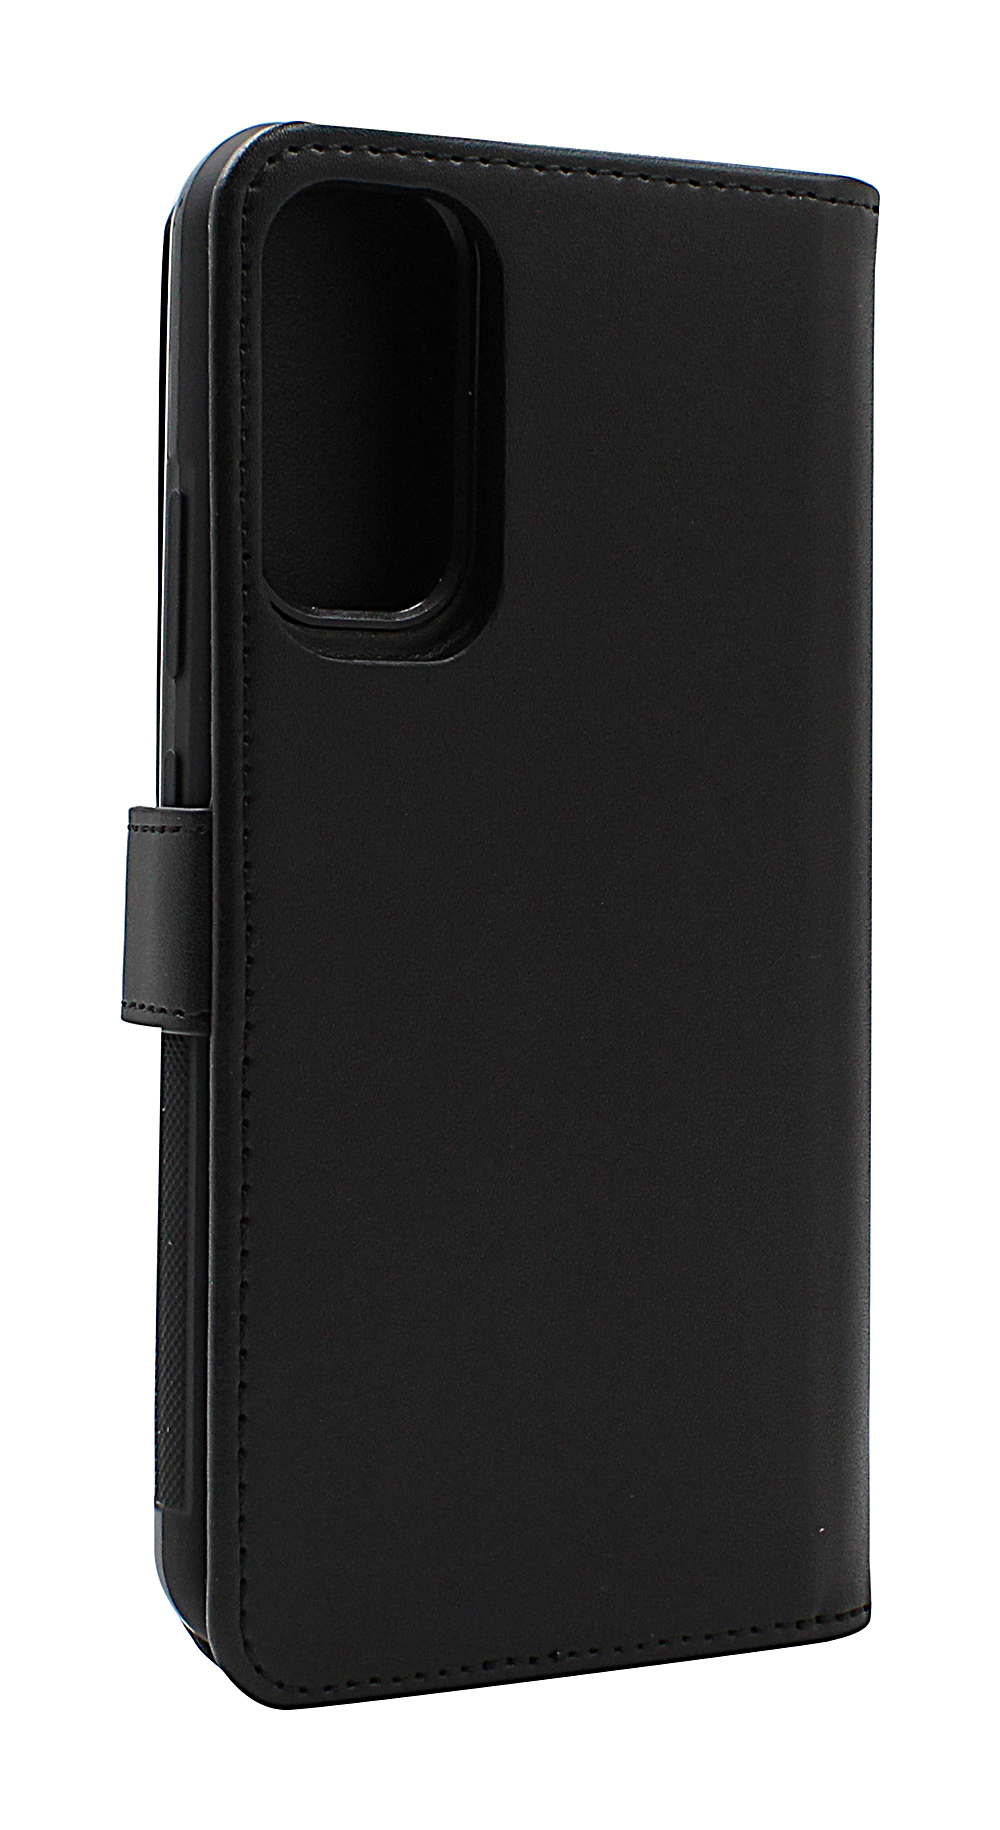 CoverInSkimblocker XL Magnet Fodral Samsung Galaxy A15 5G